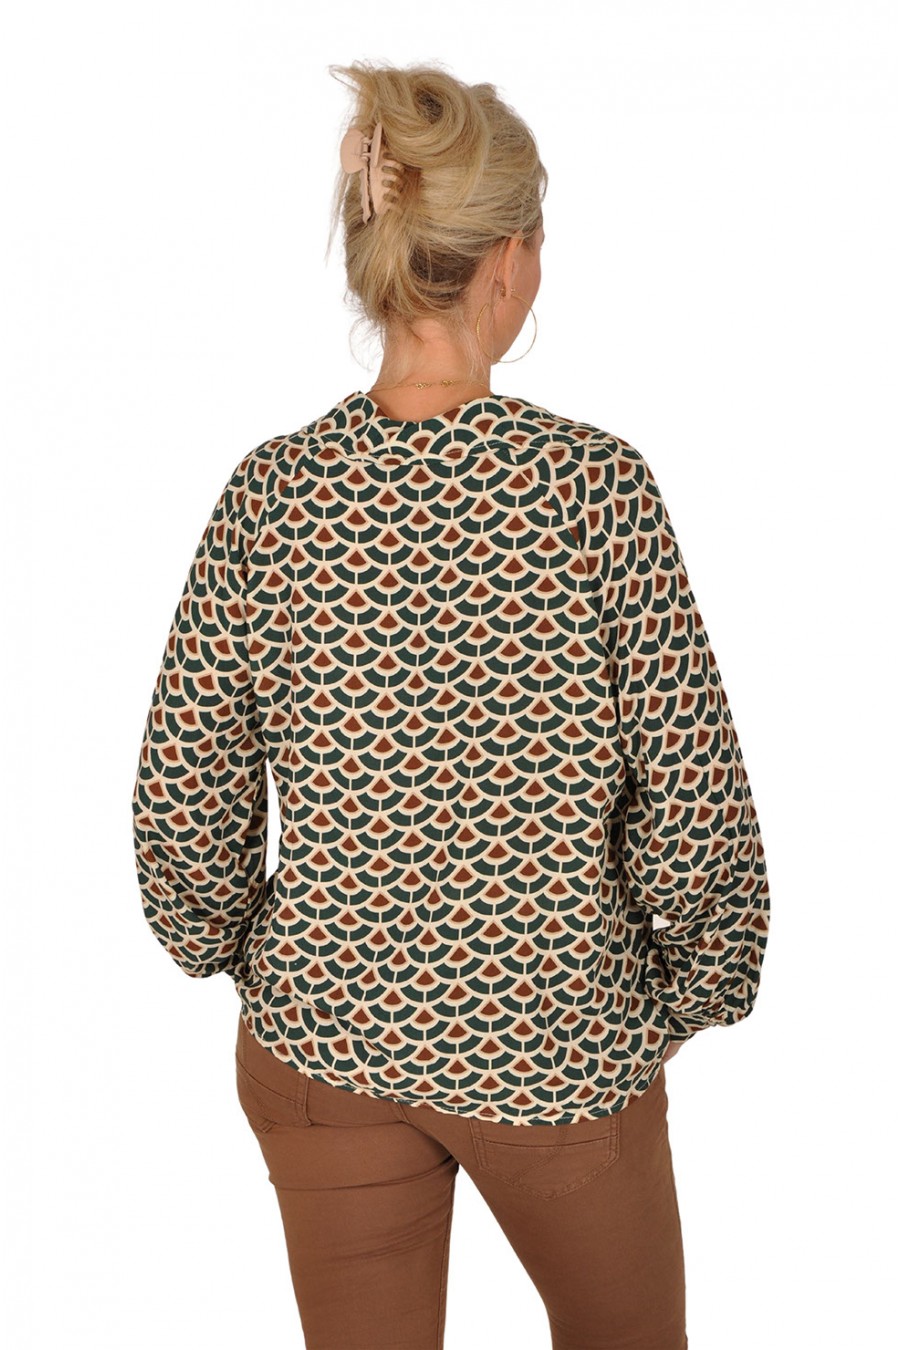 All-over print V-hals blouse met platte kraag Evi groen